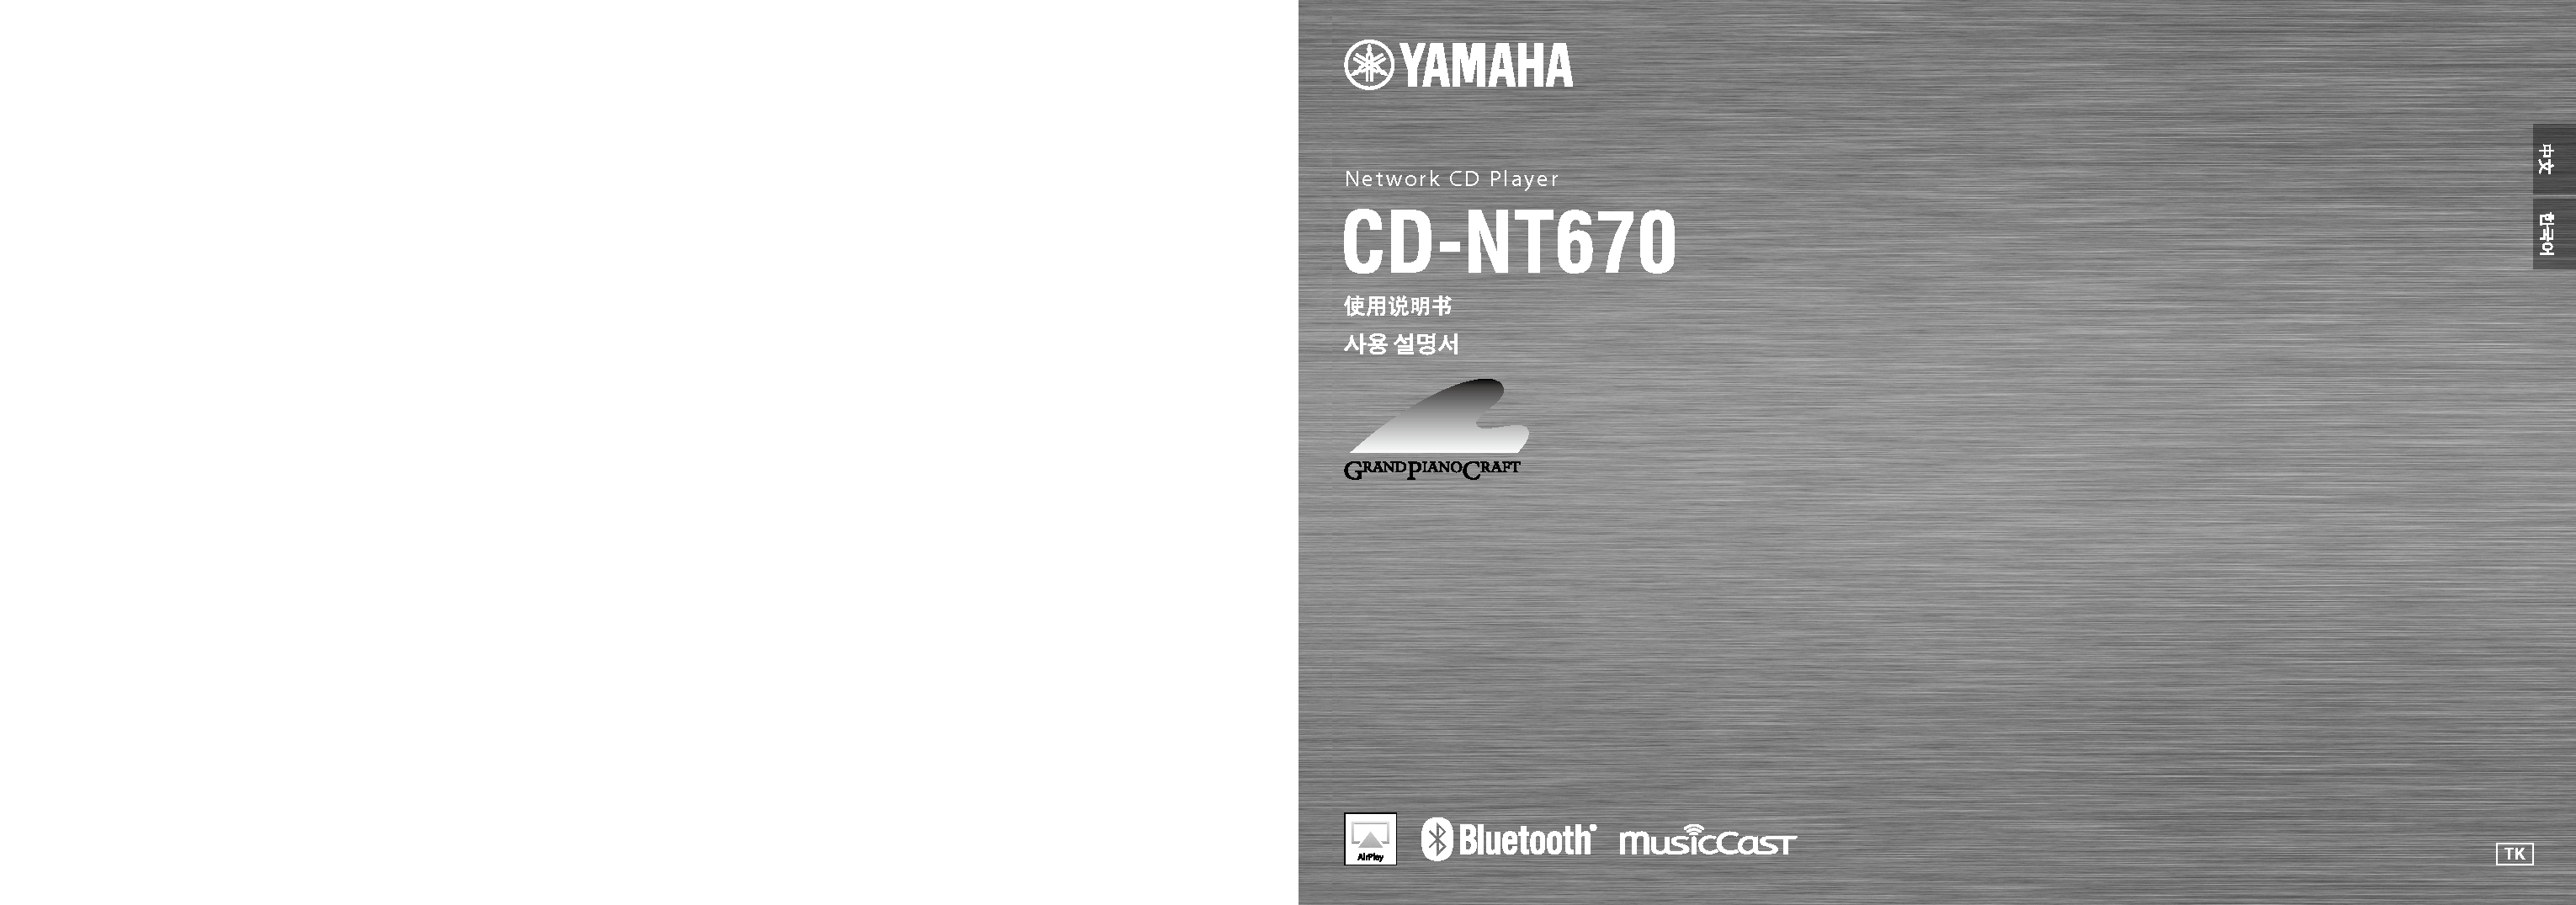 雅马哈 Yamaha CD-NT670 使用说明书 封面